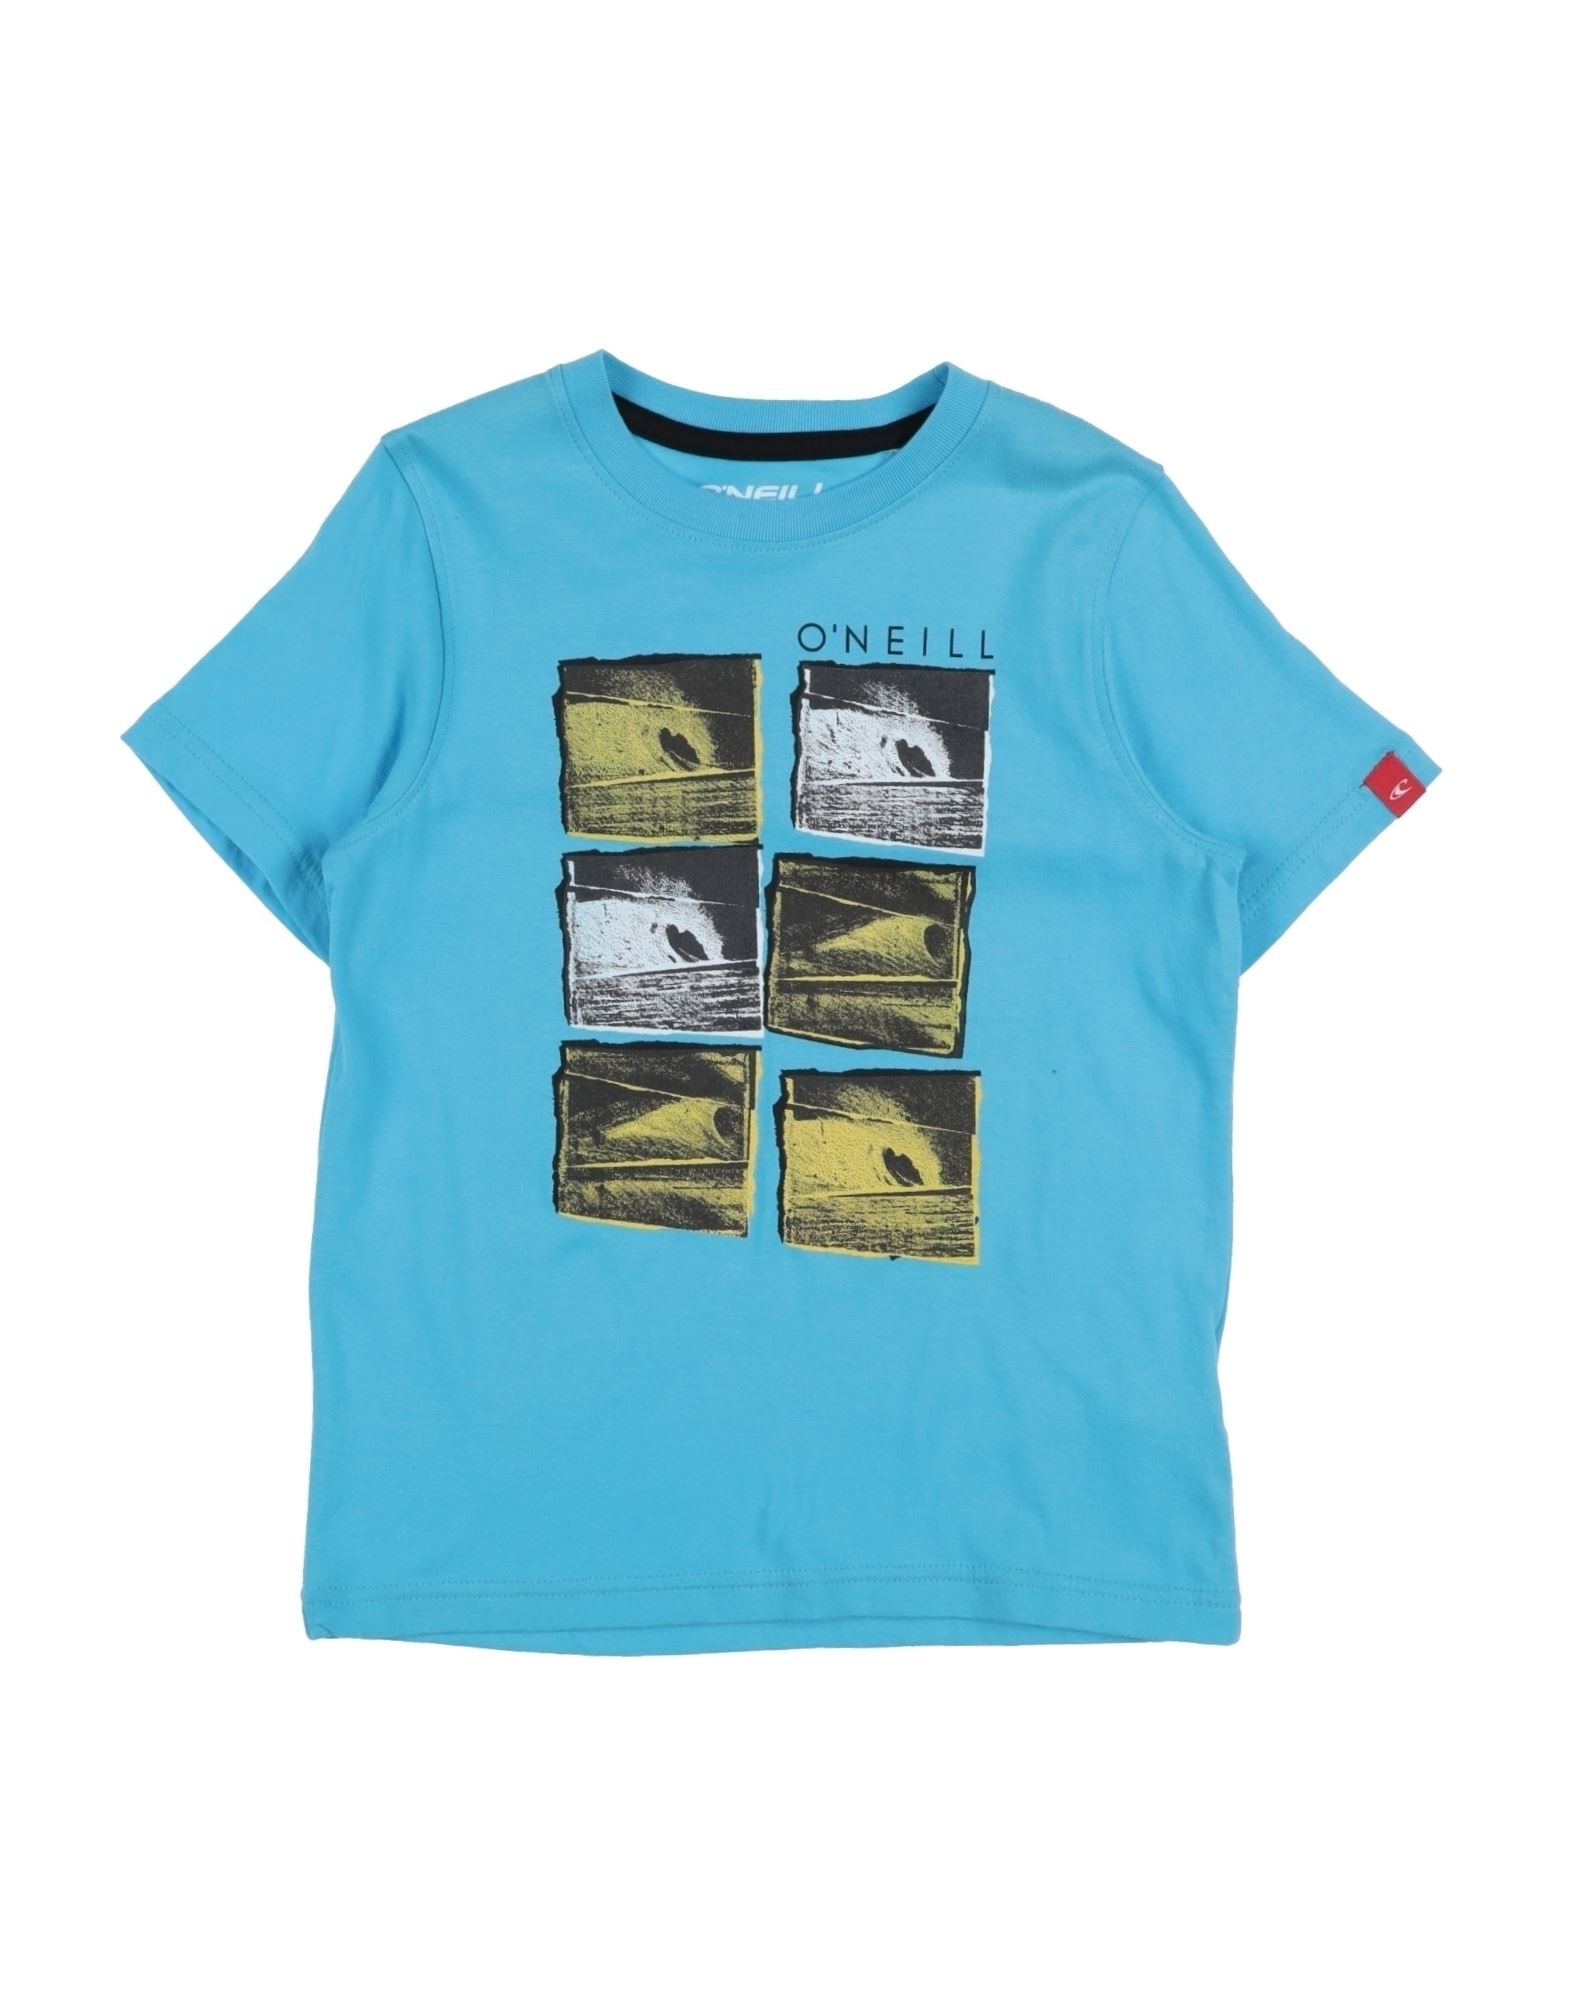 O'NEILL T-shirts Kinder Azurblau von O'NEILL